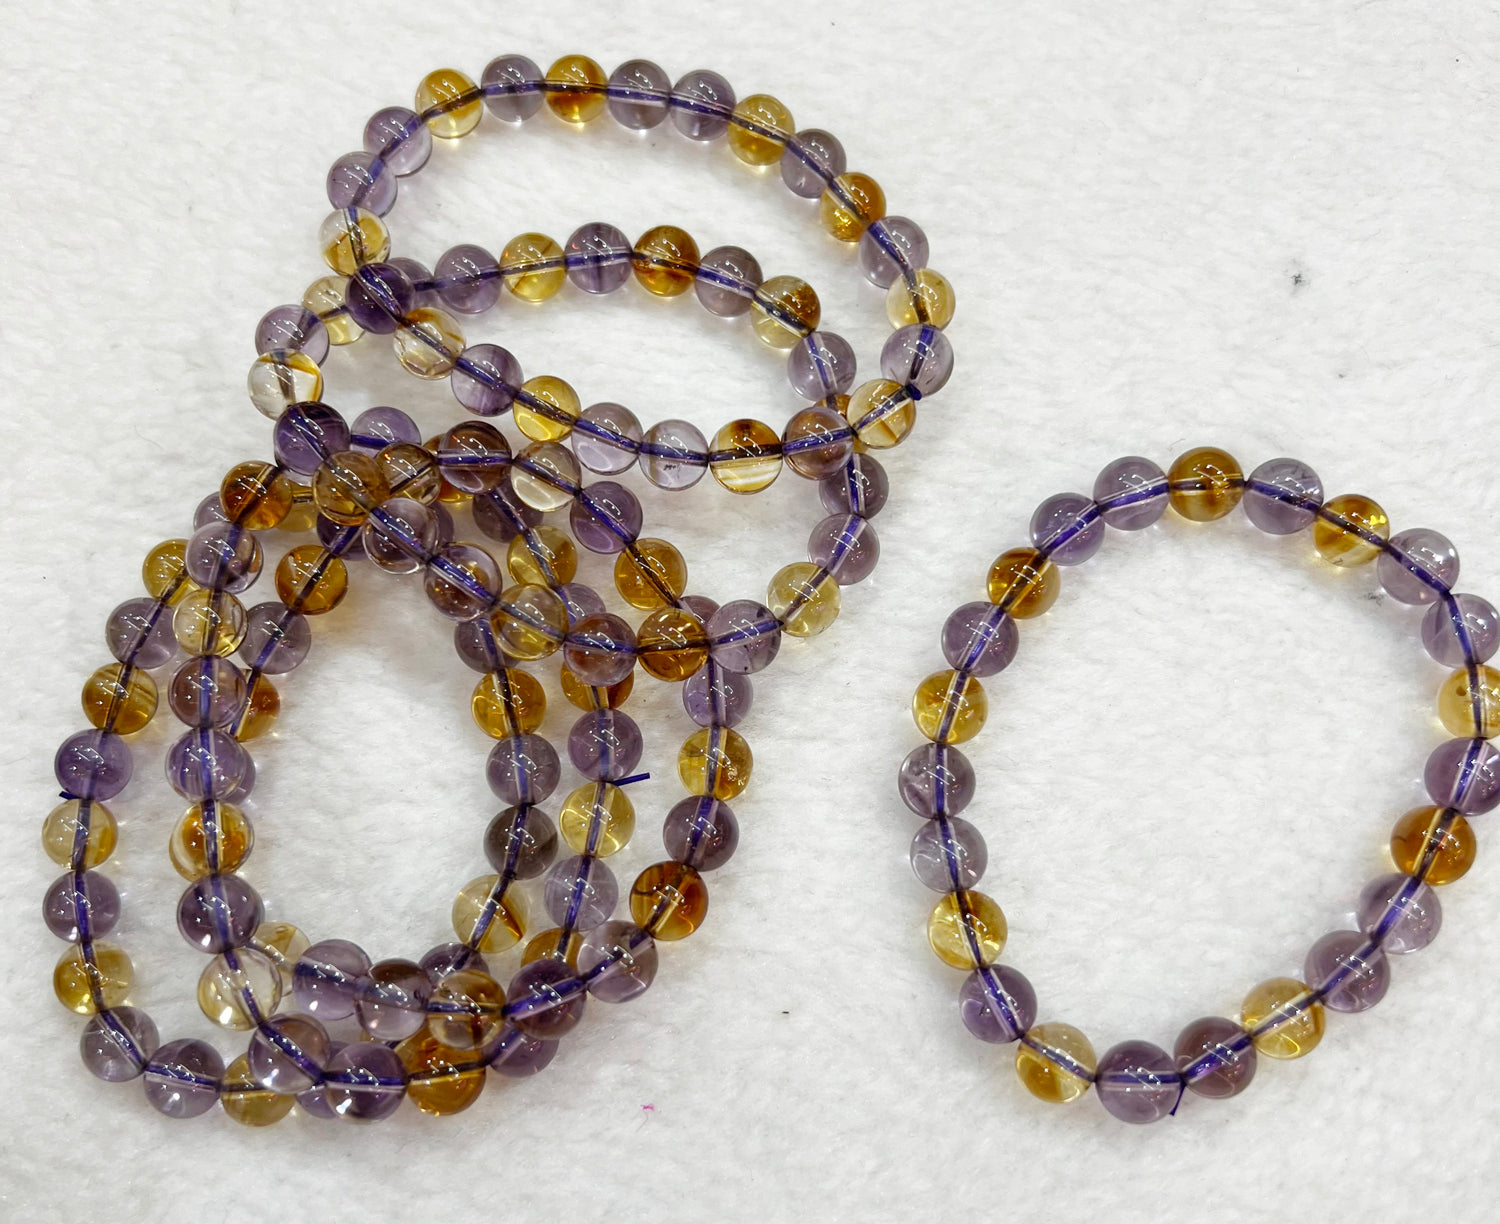 Bracelet of natural stone beads of ametrine attracting stones